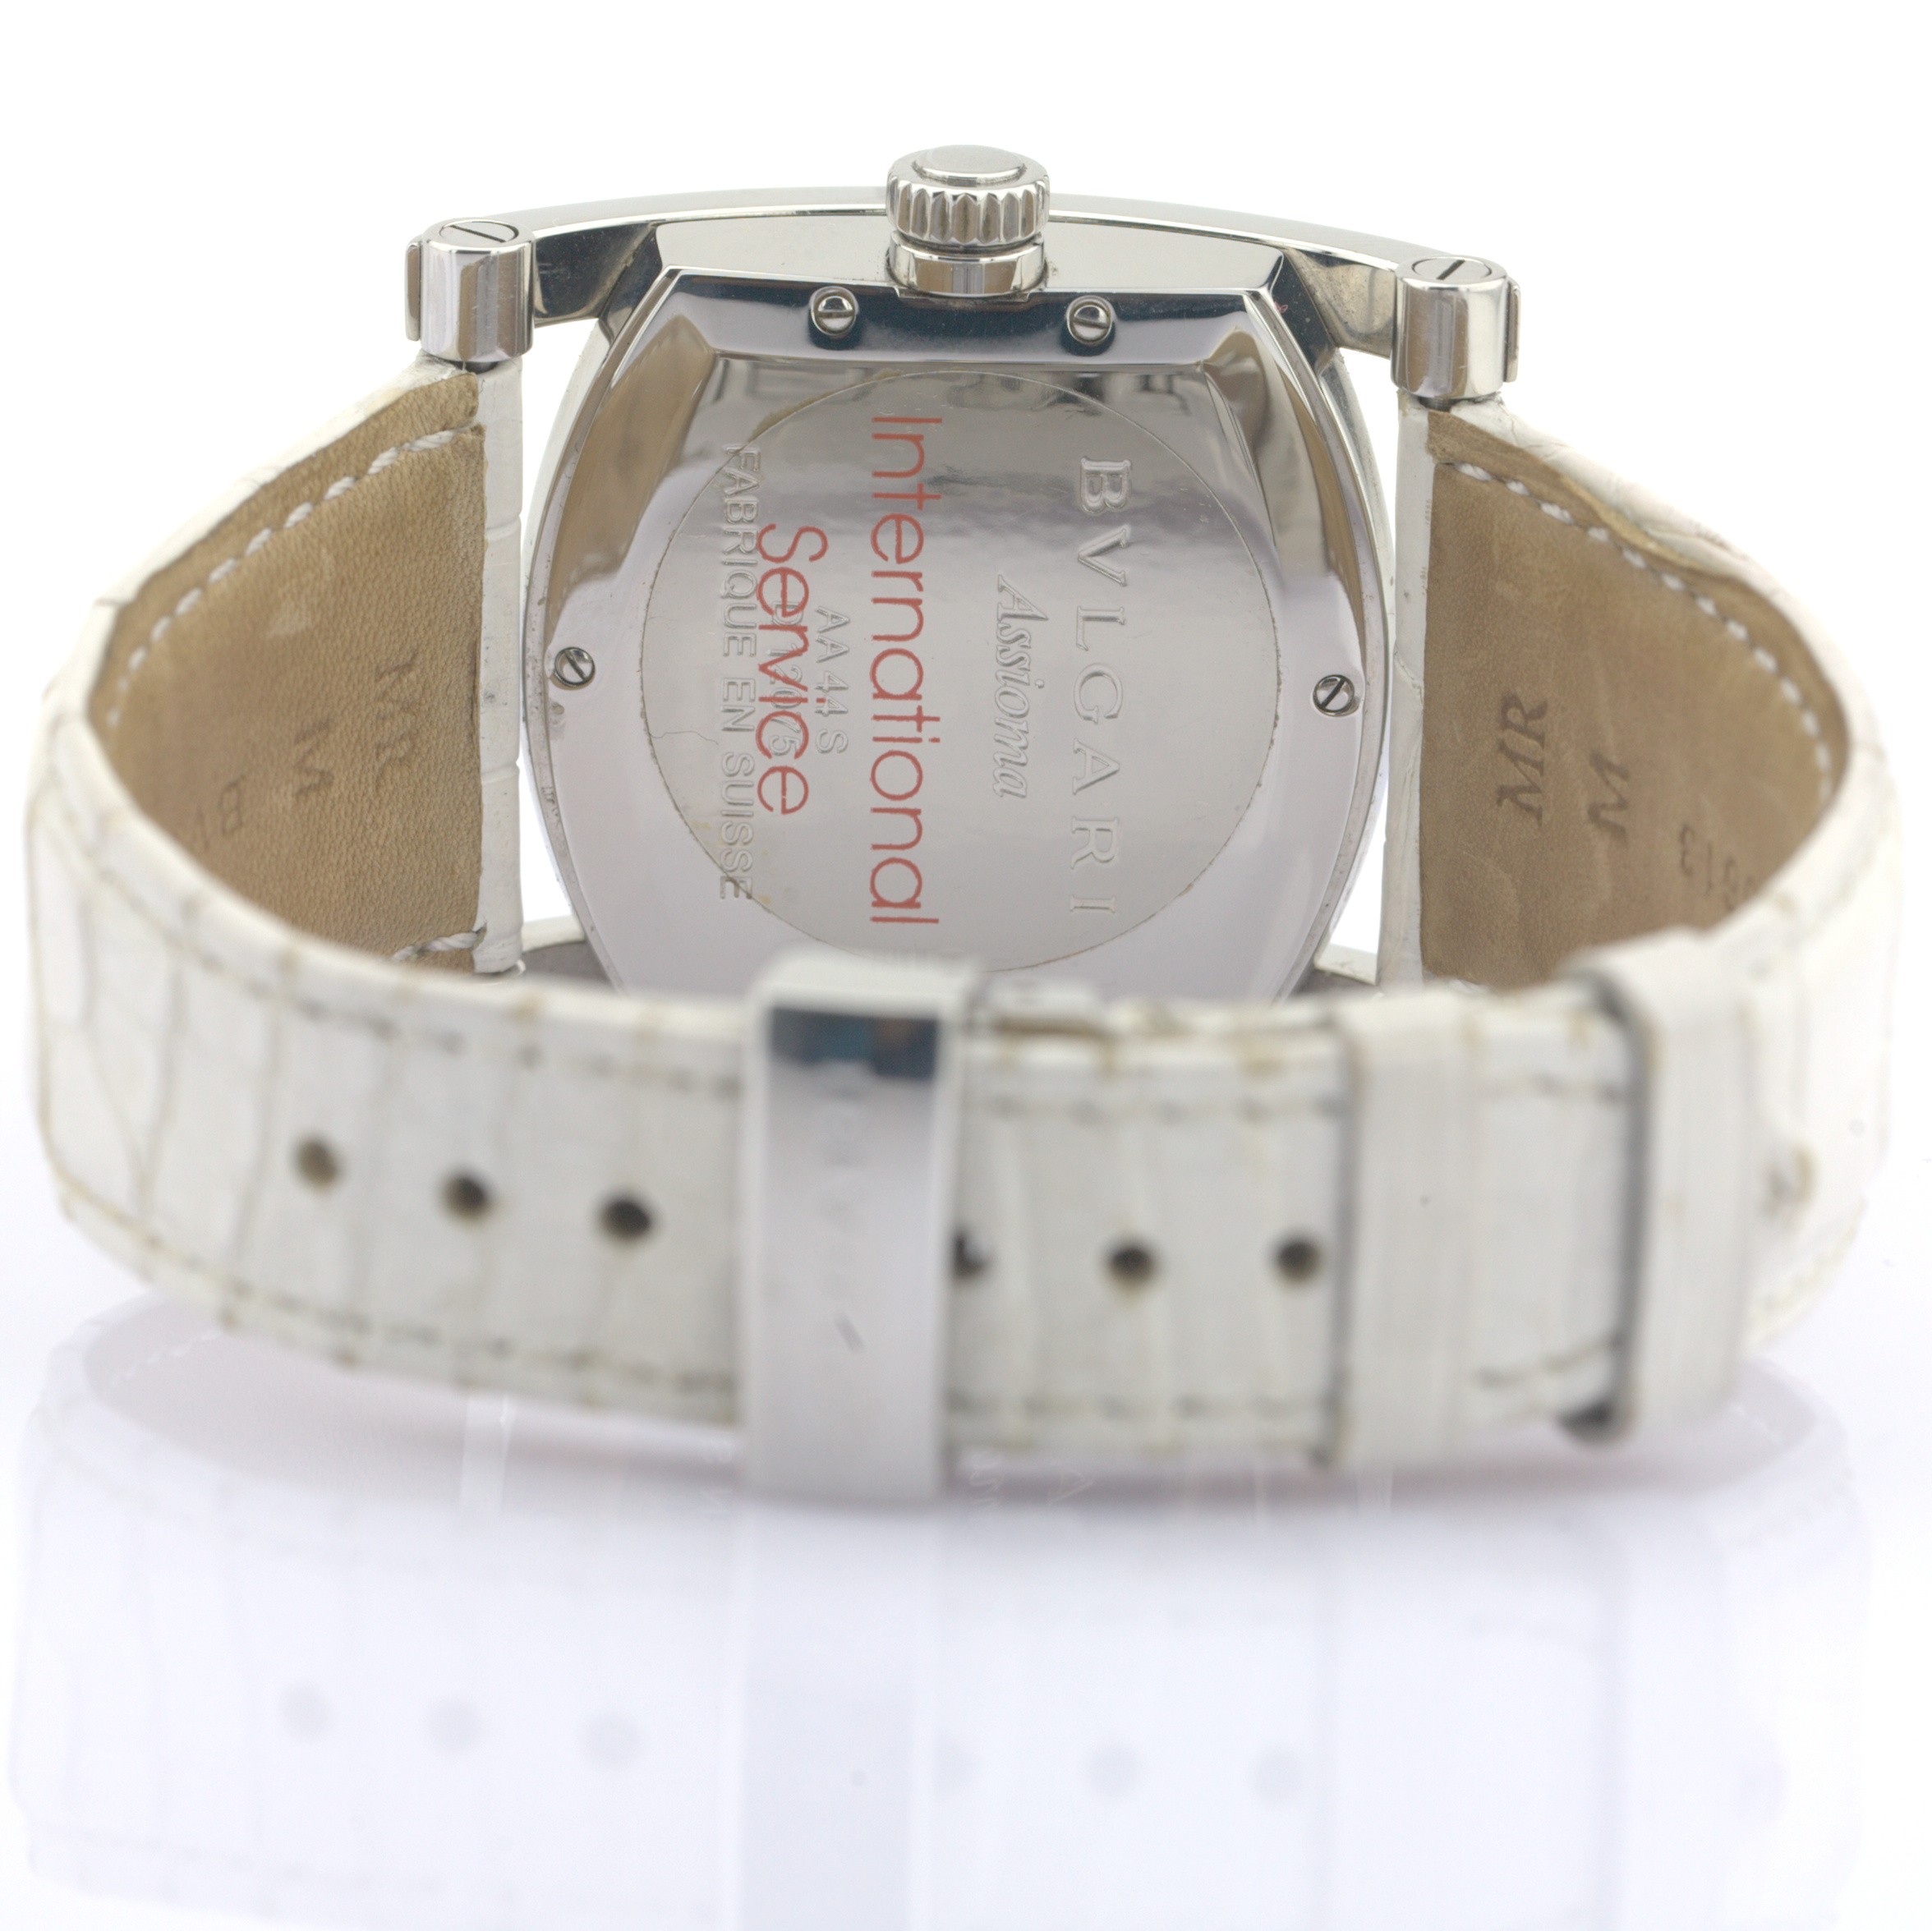 Bvlgari / AA44S Diamond - Gentleman's Steel Wrist Watch - Image 7 of 9